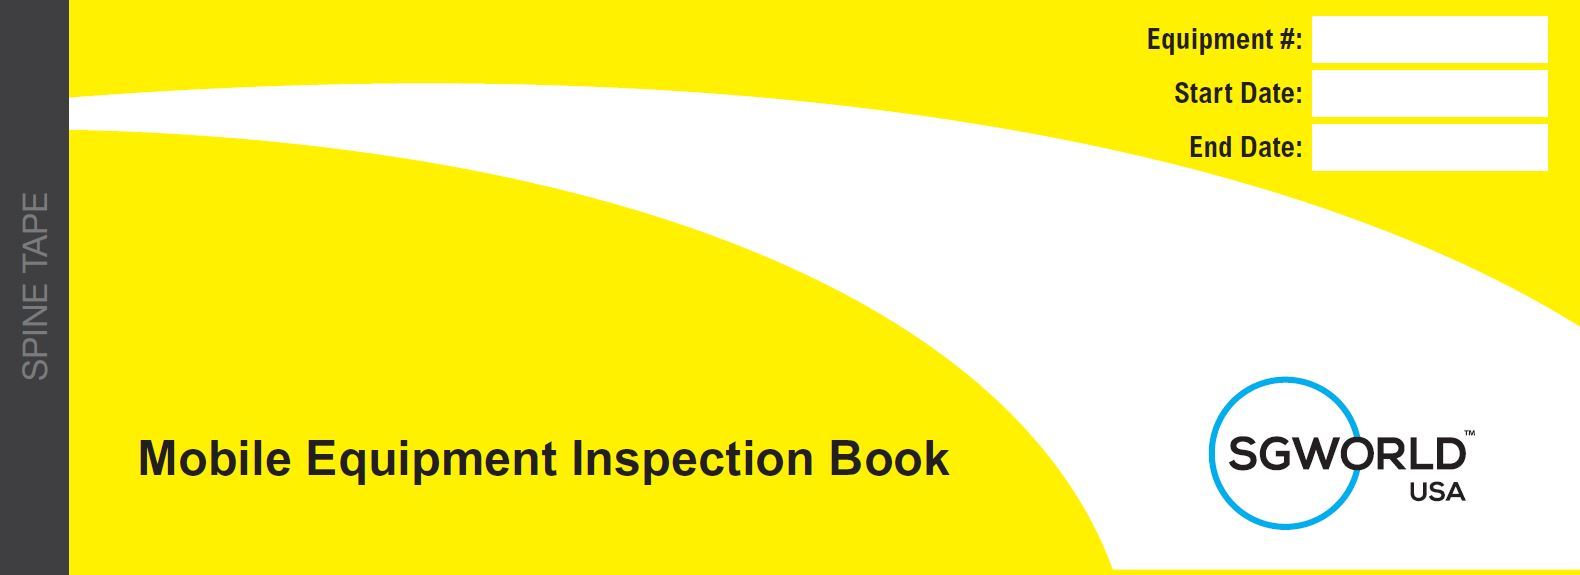 SG World Mobile Equipment Inspection Checklist (booklets)